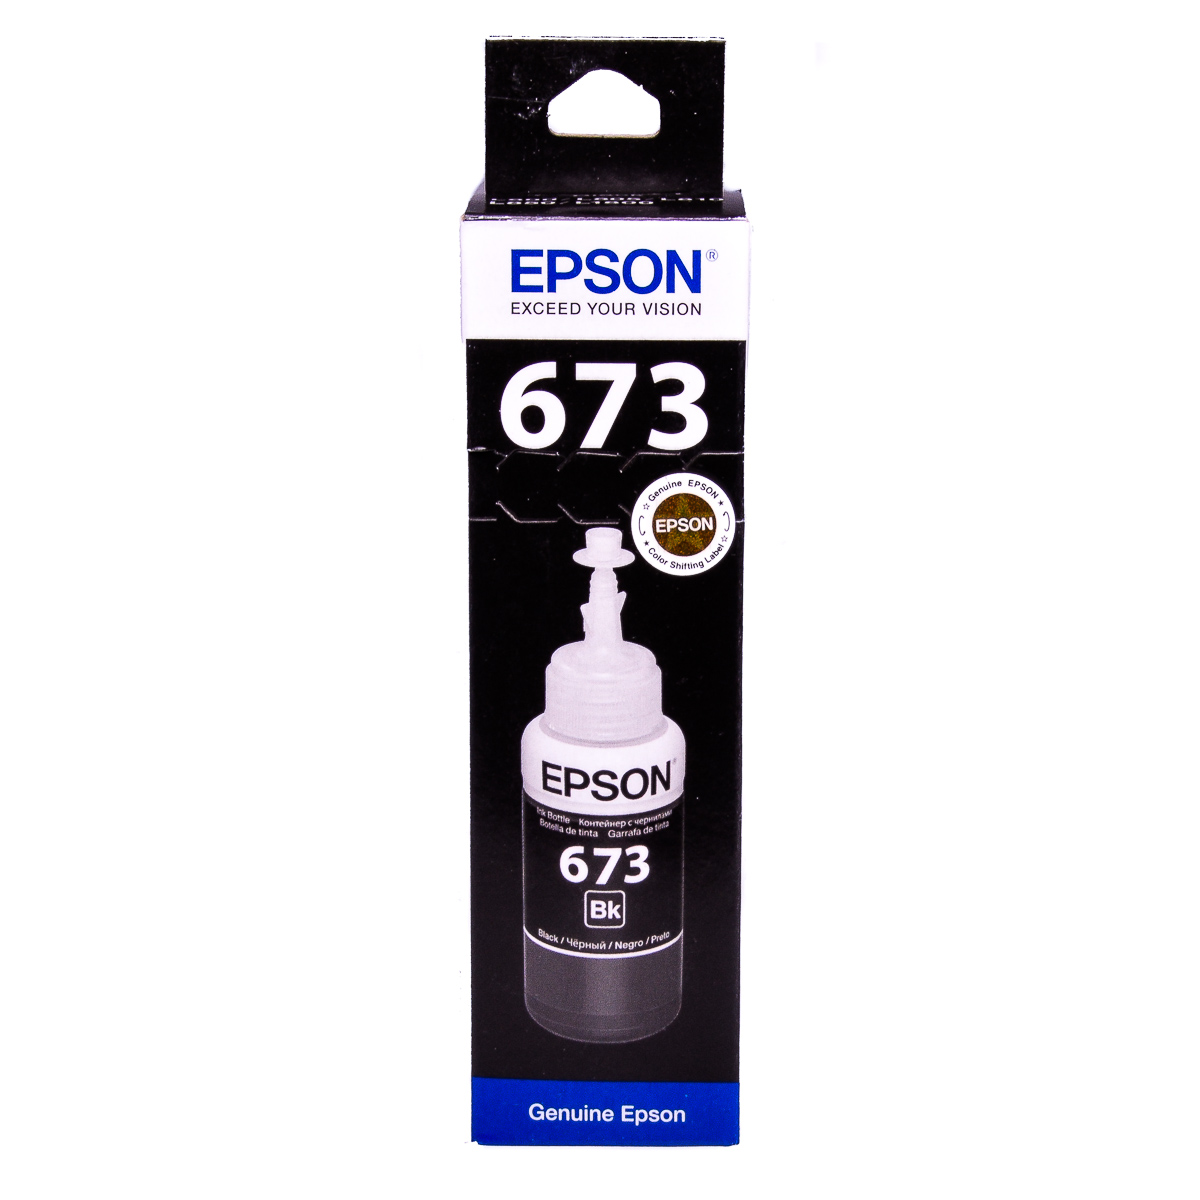 Epson T0801 Black original dye ink refill Replaces Stylus R285